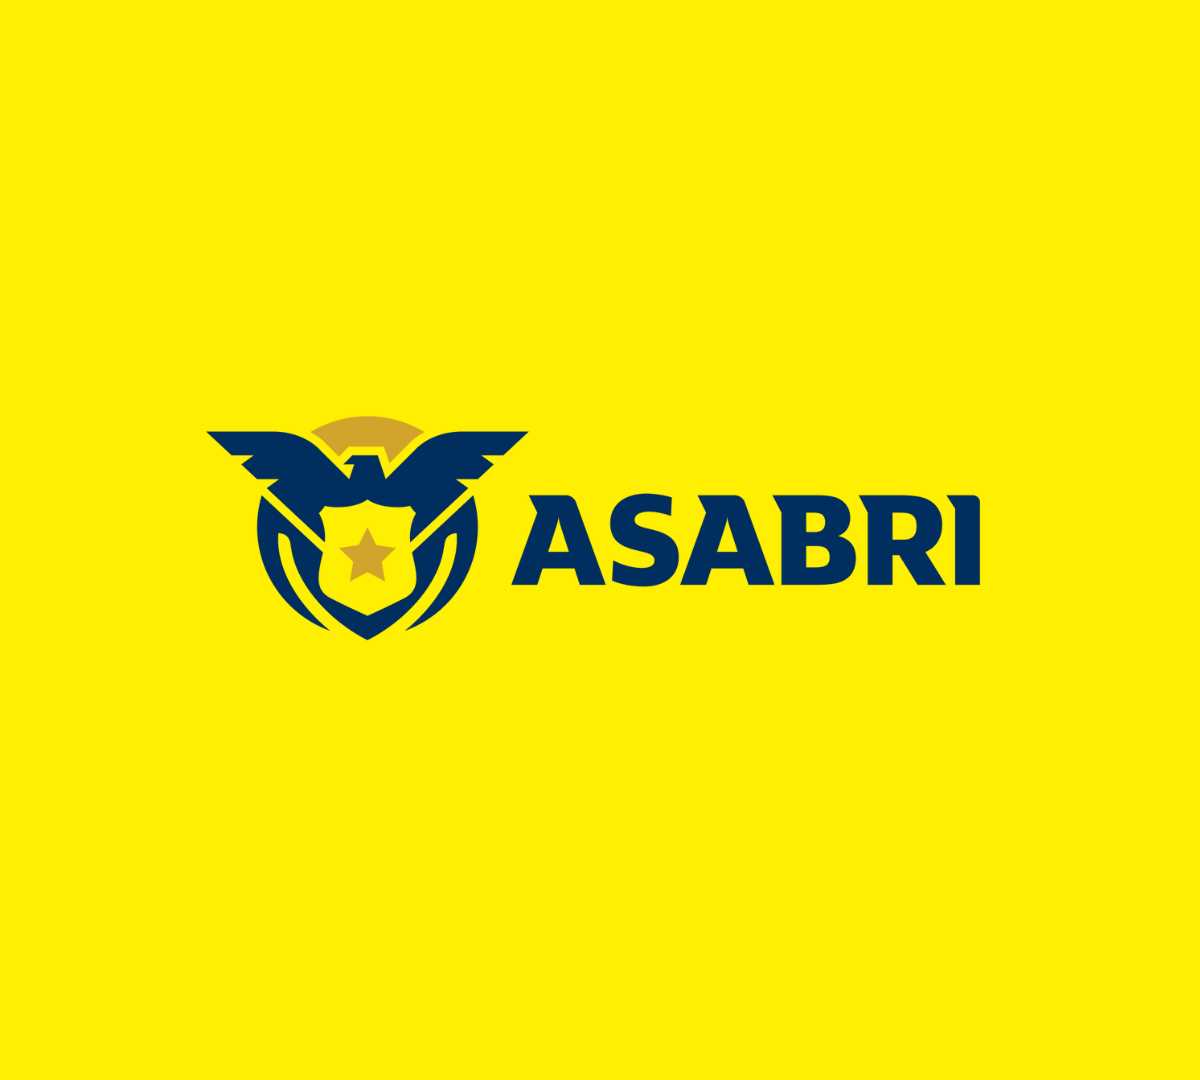 Profil Perusahaan PT. Asabri dan logo perusahaan